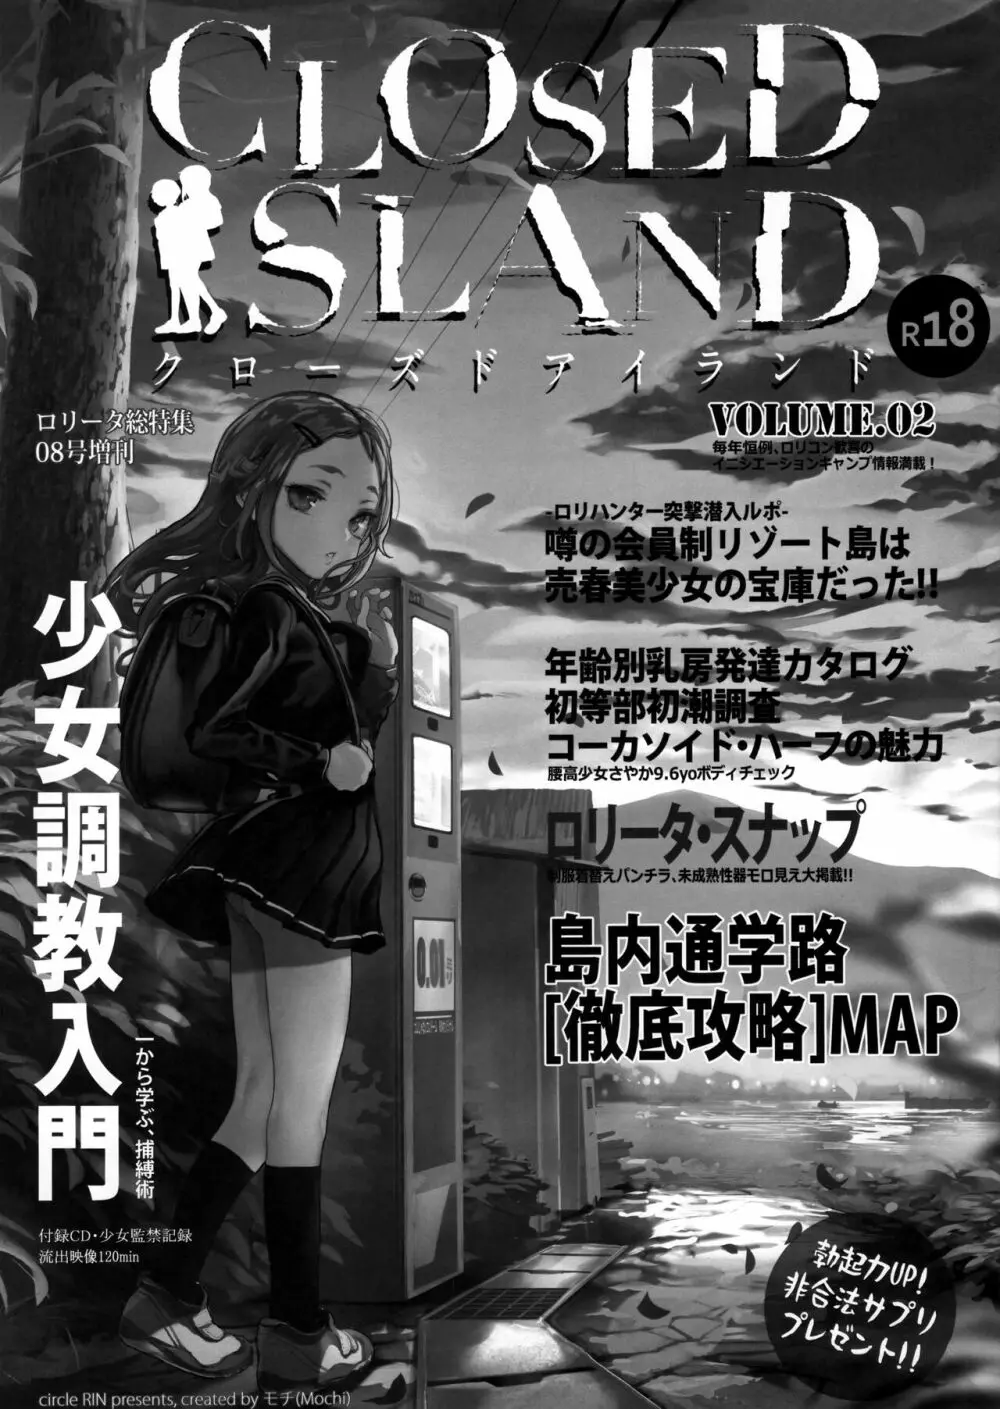 CLOSED ISLAND Volume.2 1ページ